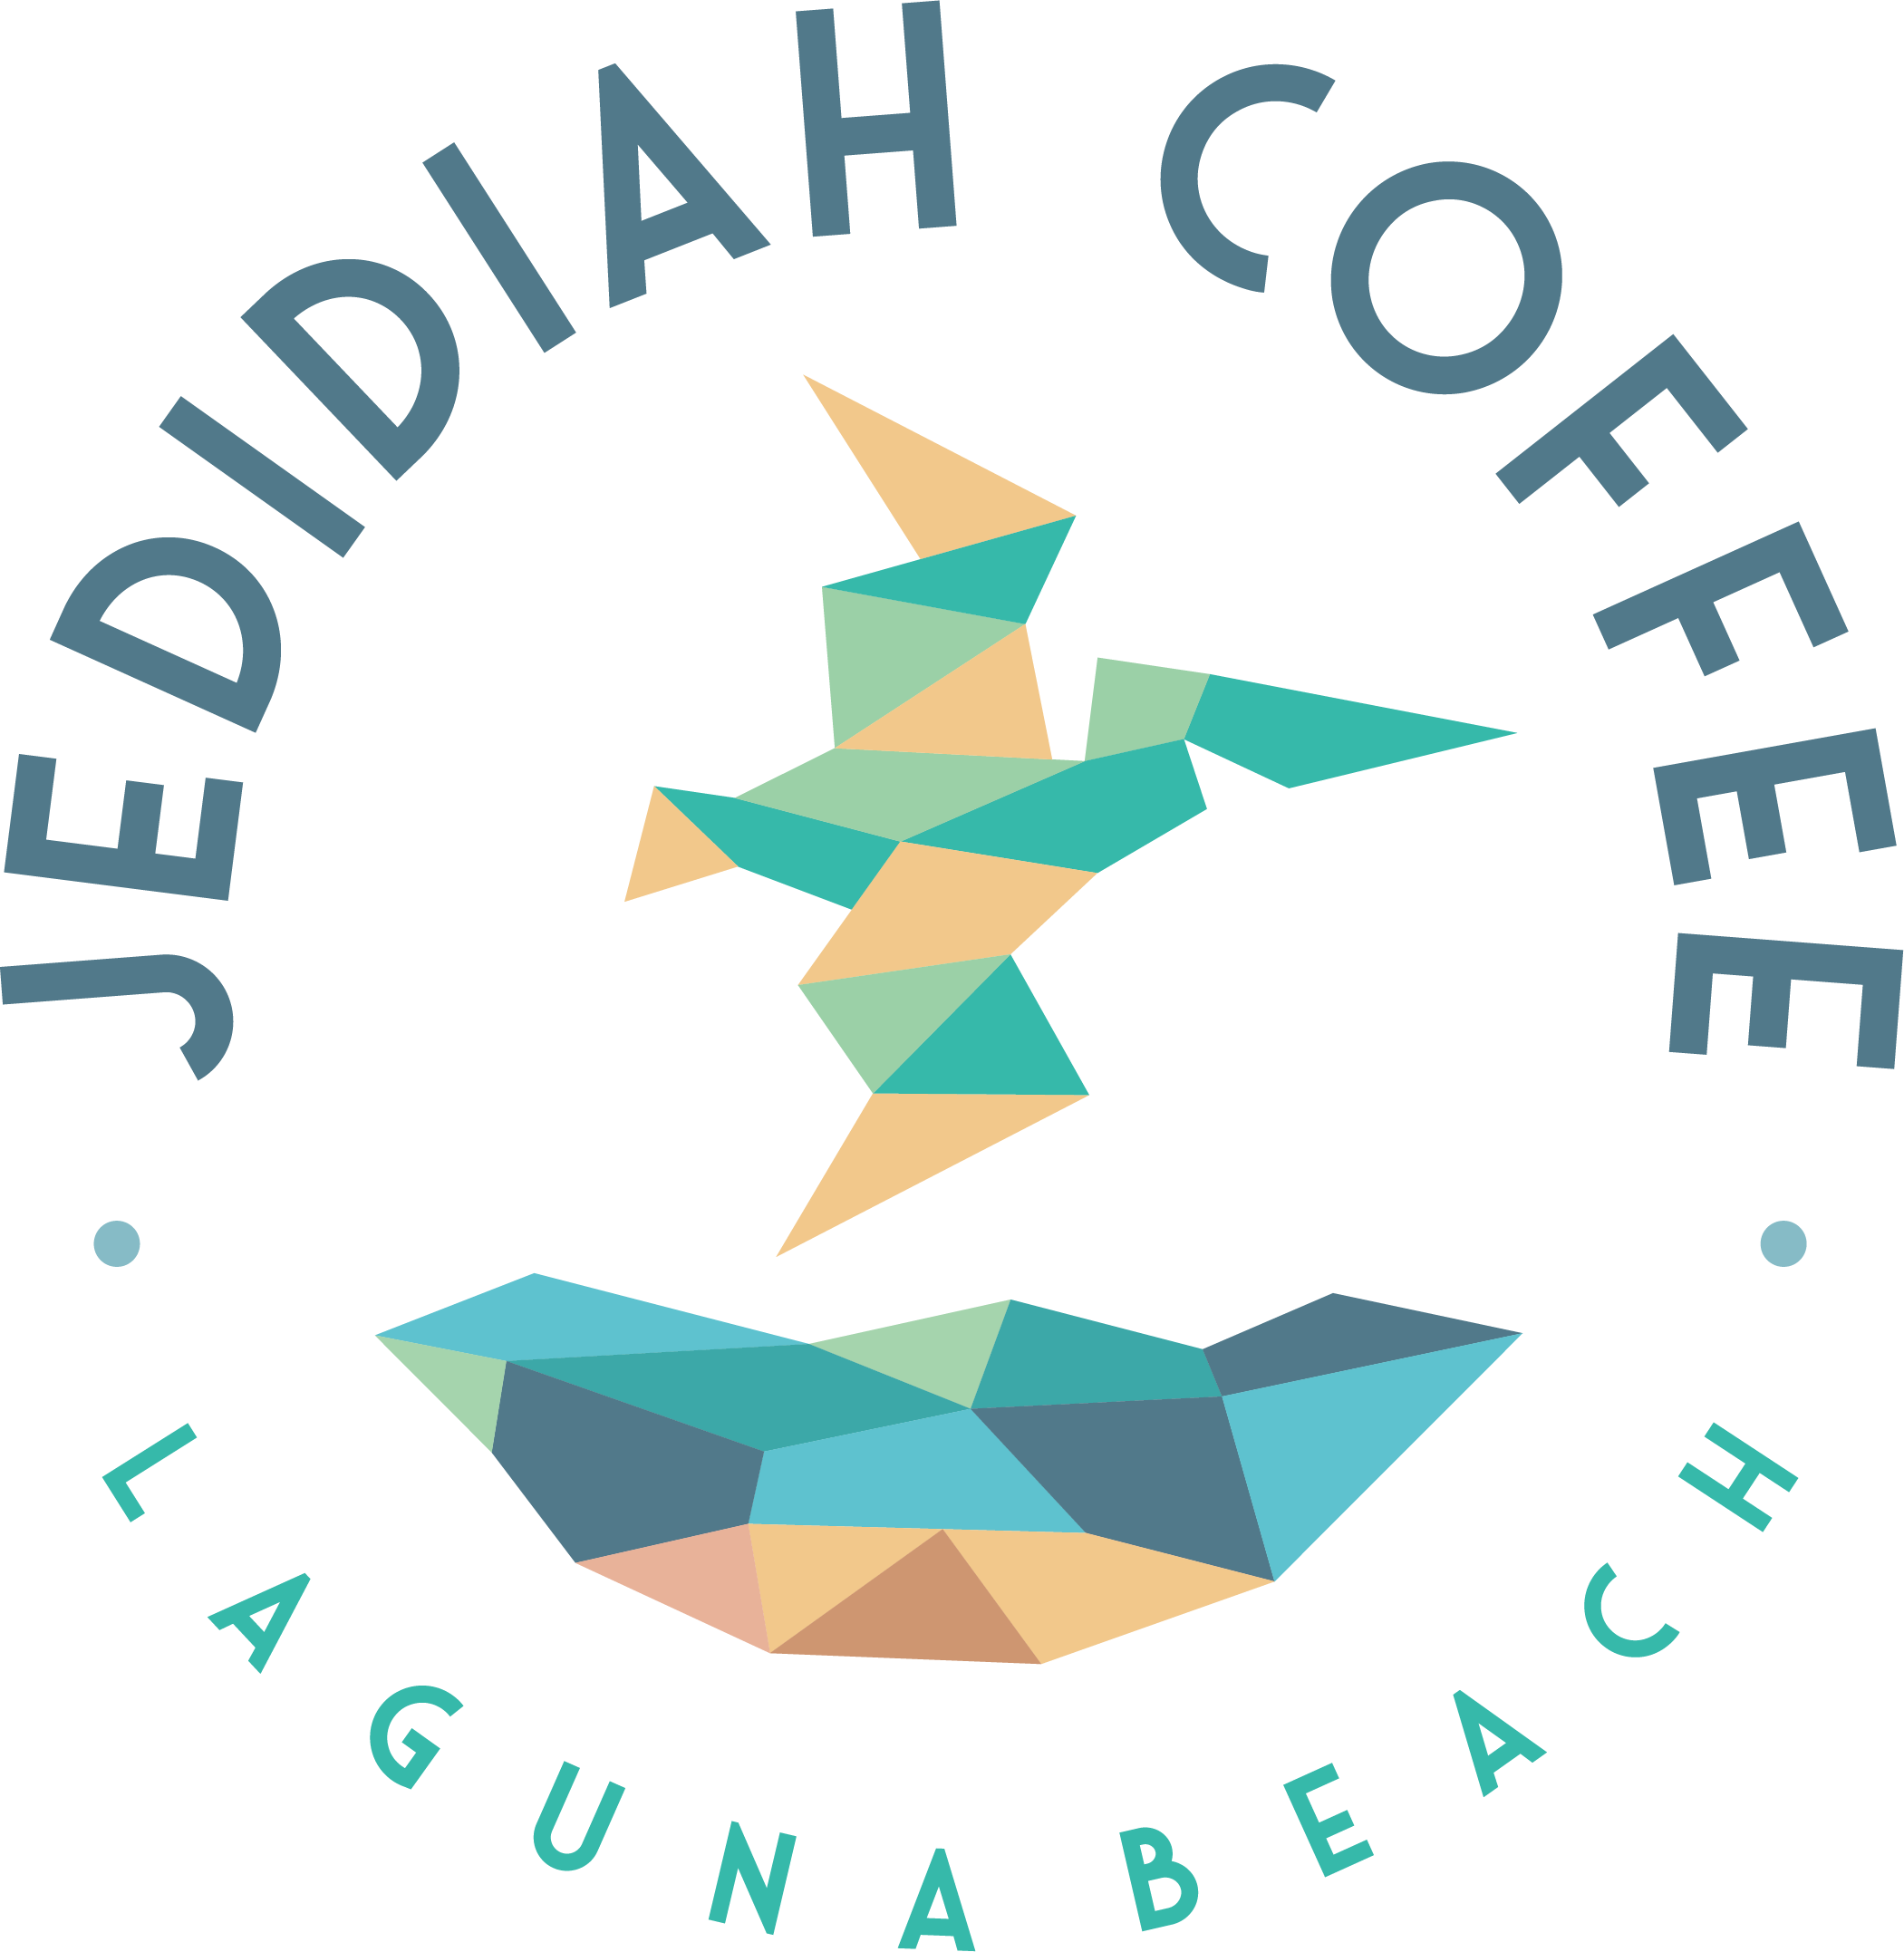 https://images.squarespace-cdn.com/content/v1/58ebc89dbebafb3232ca2664/1605852441739-W3V9PI2LZ99MUMN5JMC0/Jedidiah+Coffee+Logo.png